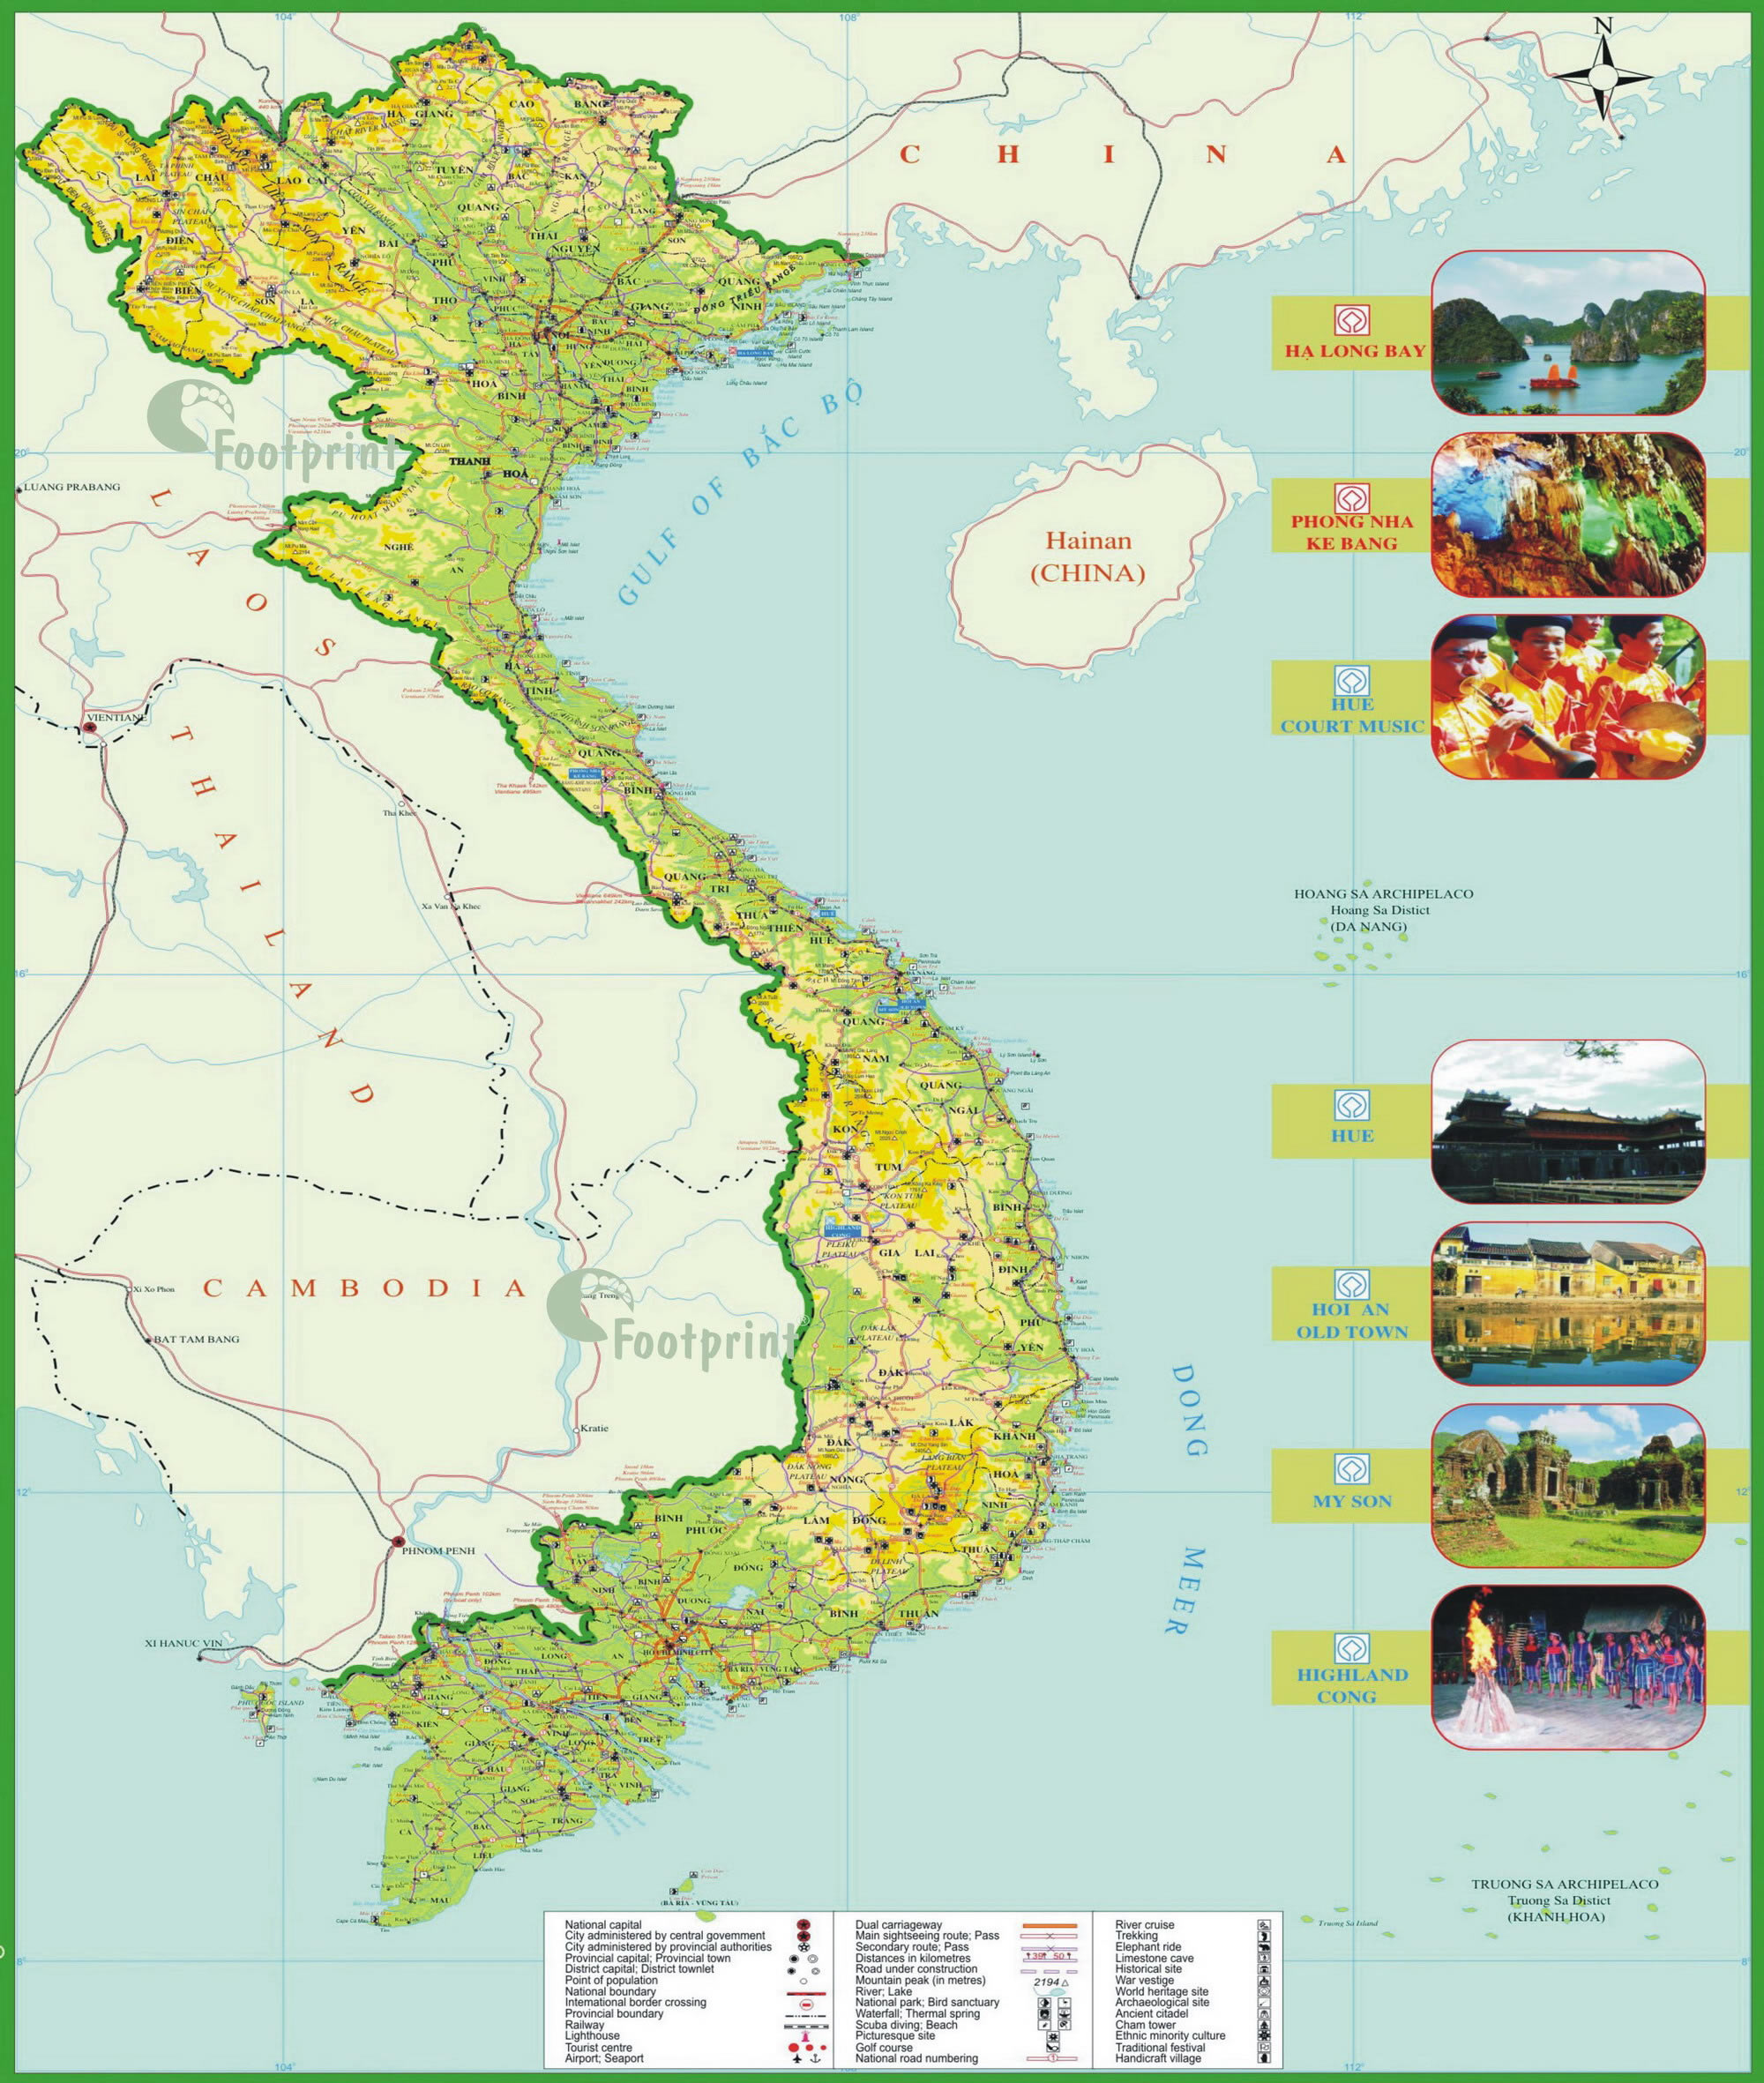 turistik haritasi vietnam